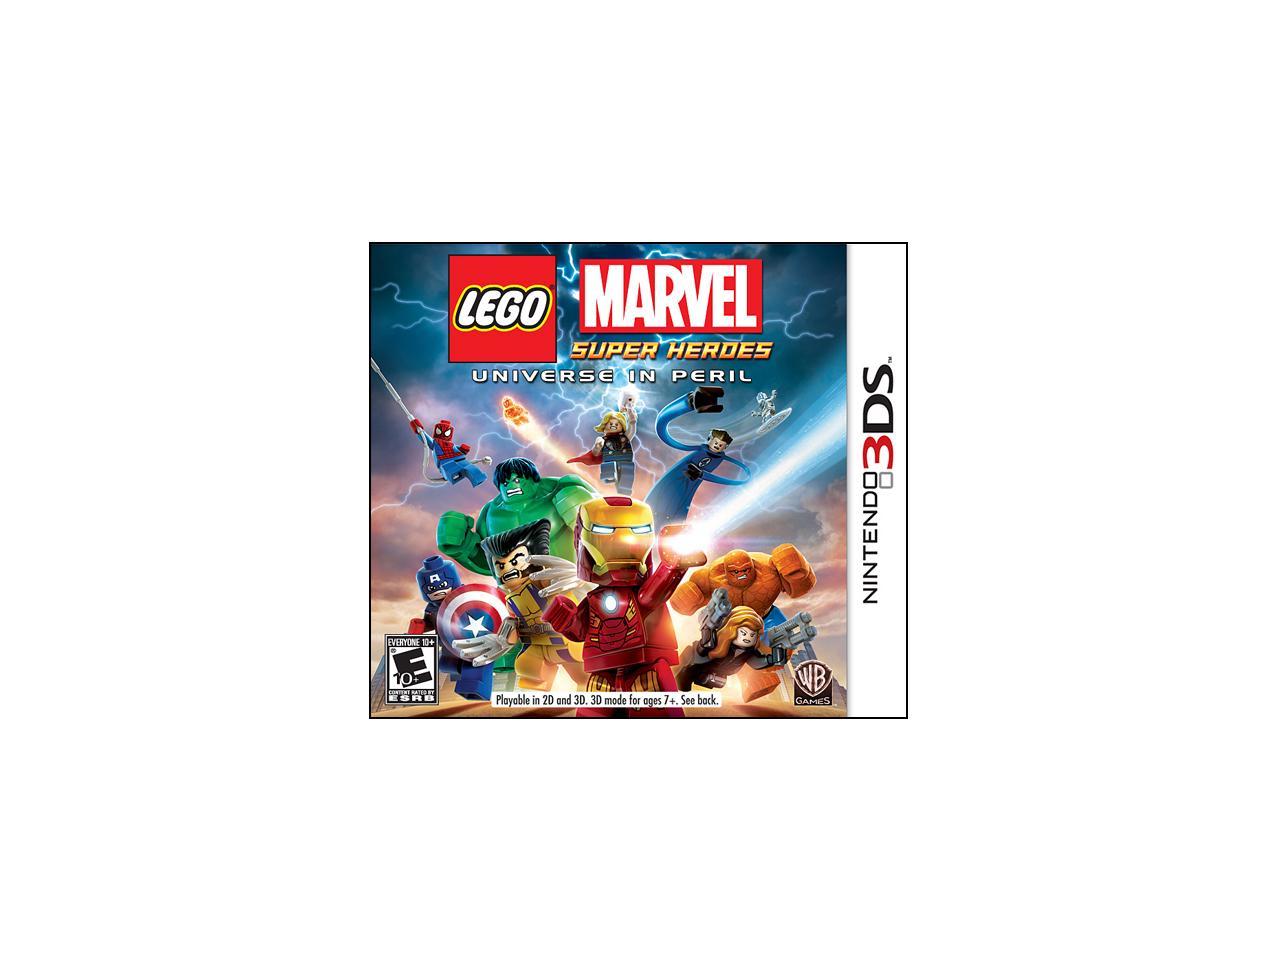 sector fireplace boxing LEGO: Marvel Super Heroes Nintendo 3DS - Newegg.com